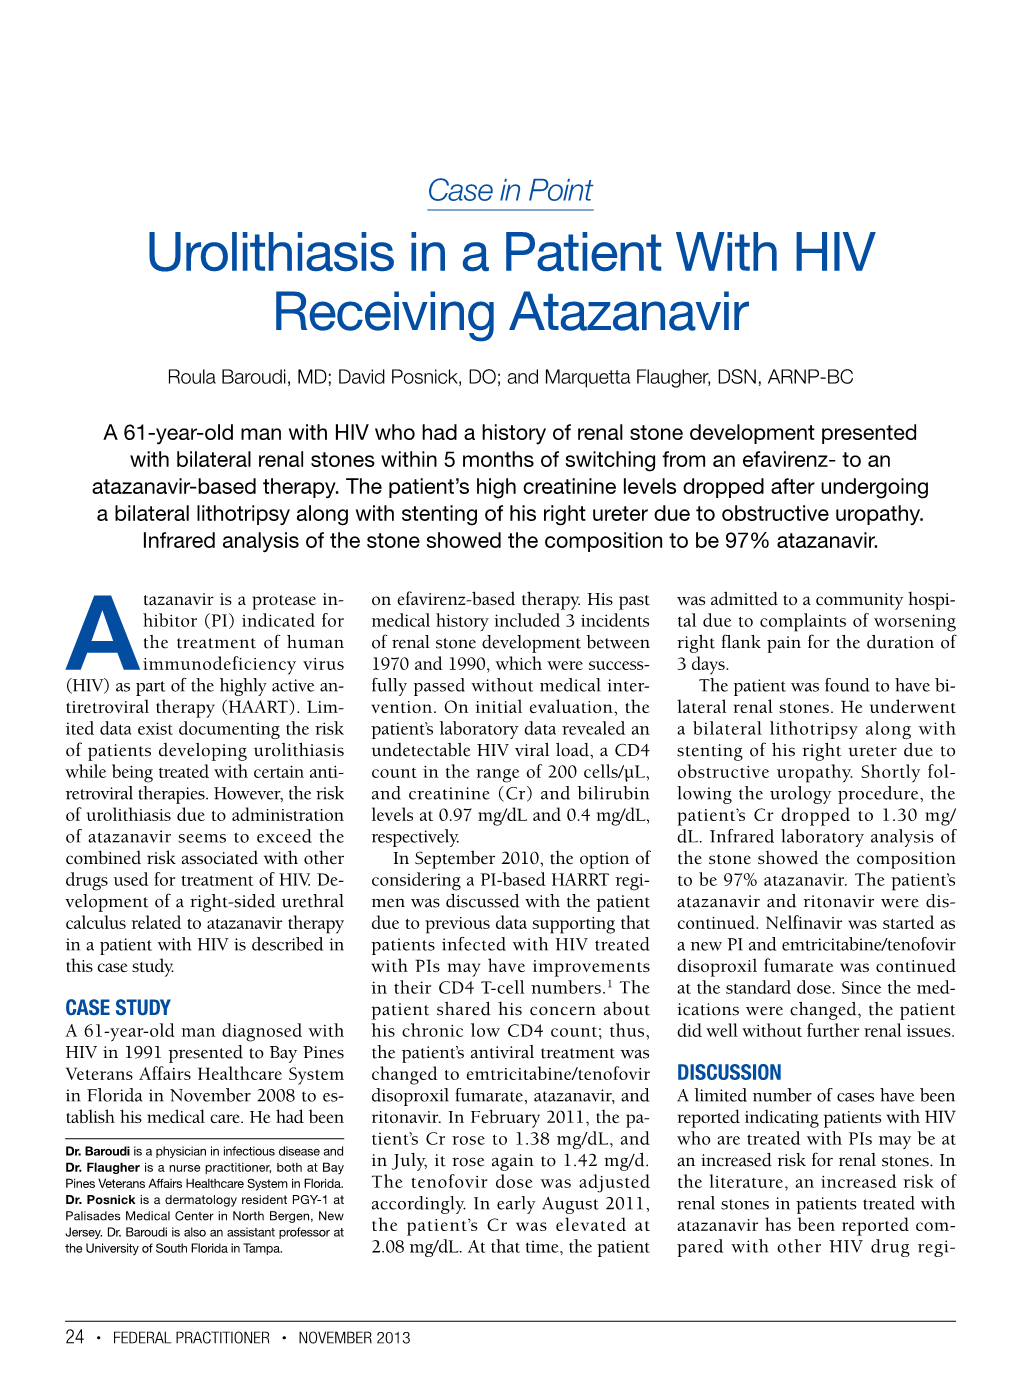 Urolithiasis in a Patient with HIV Receiving Atazanavir